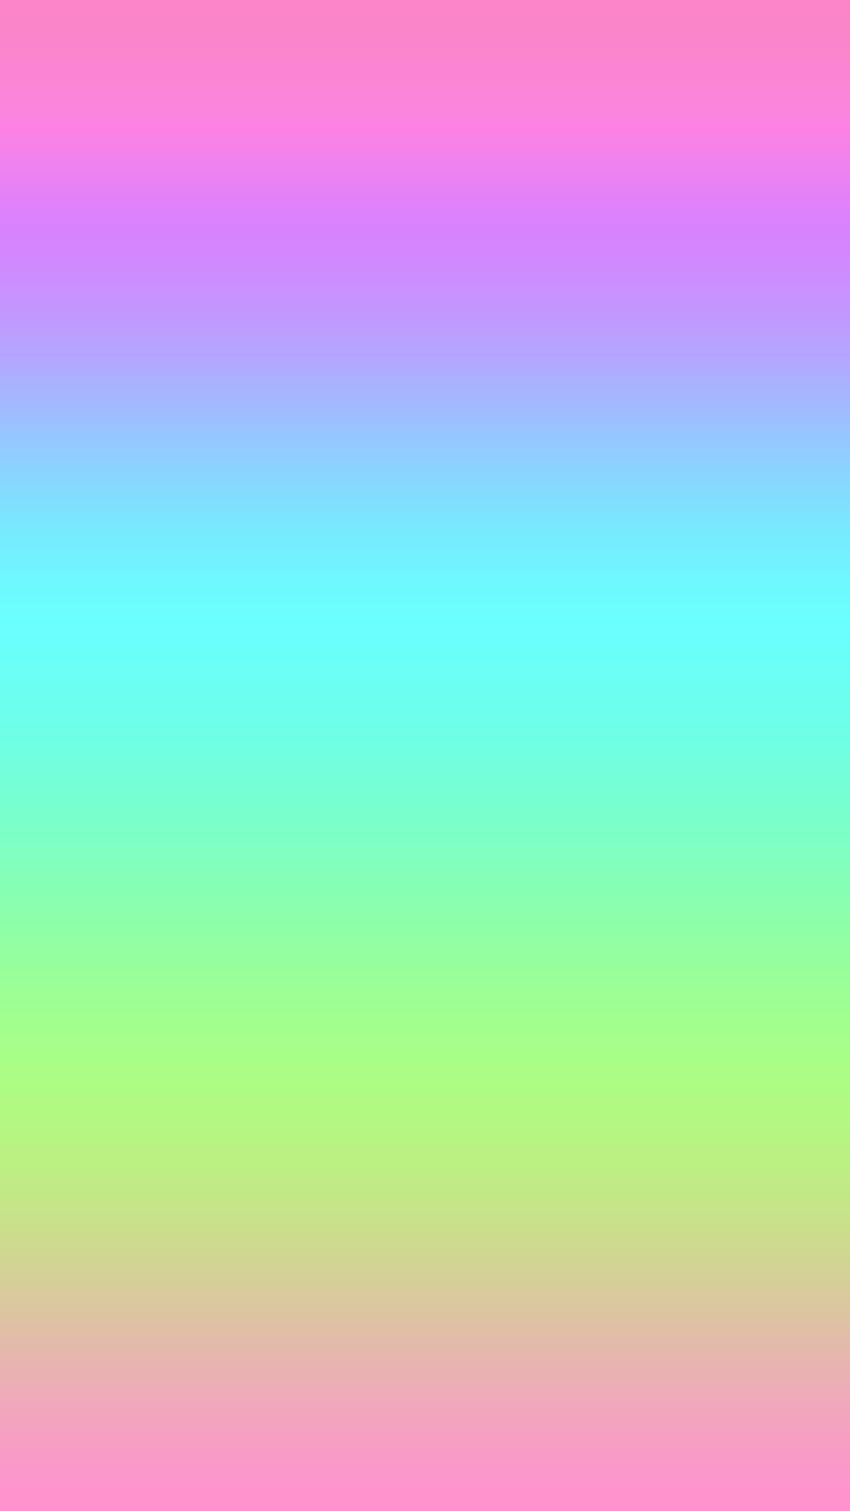 Dégradé, ombre, rose, bleu, violet, vert, , , iPhone, iPad, android, Samsung. Peinture d'art bleu, Fond de couleur unie, Art bleu, Ombre violet et bleu Fond d'écran de téléphone HD